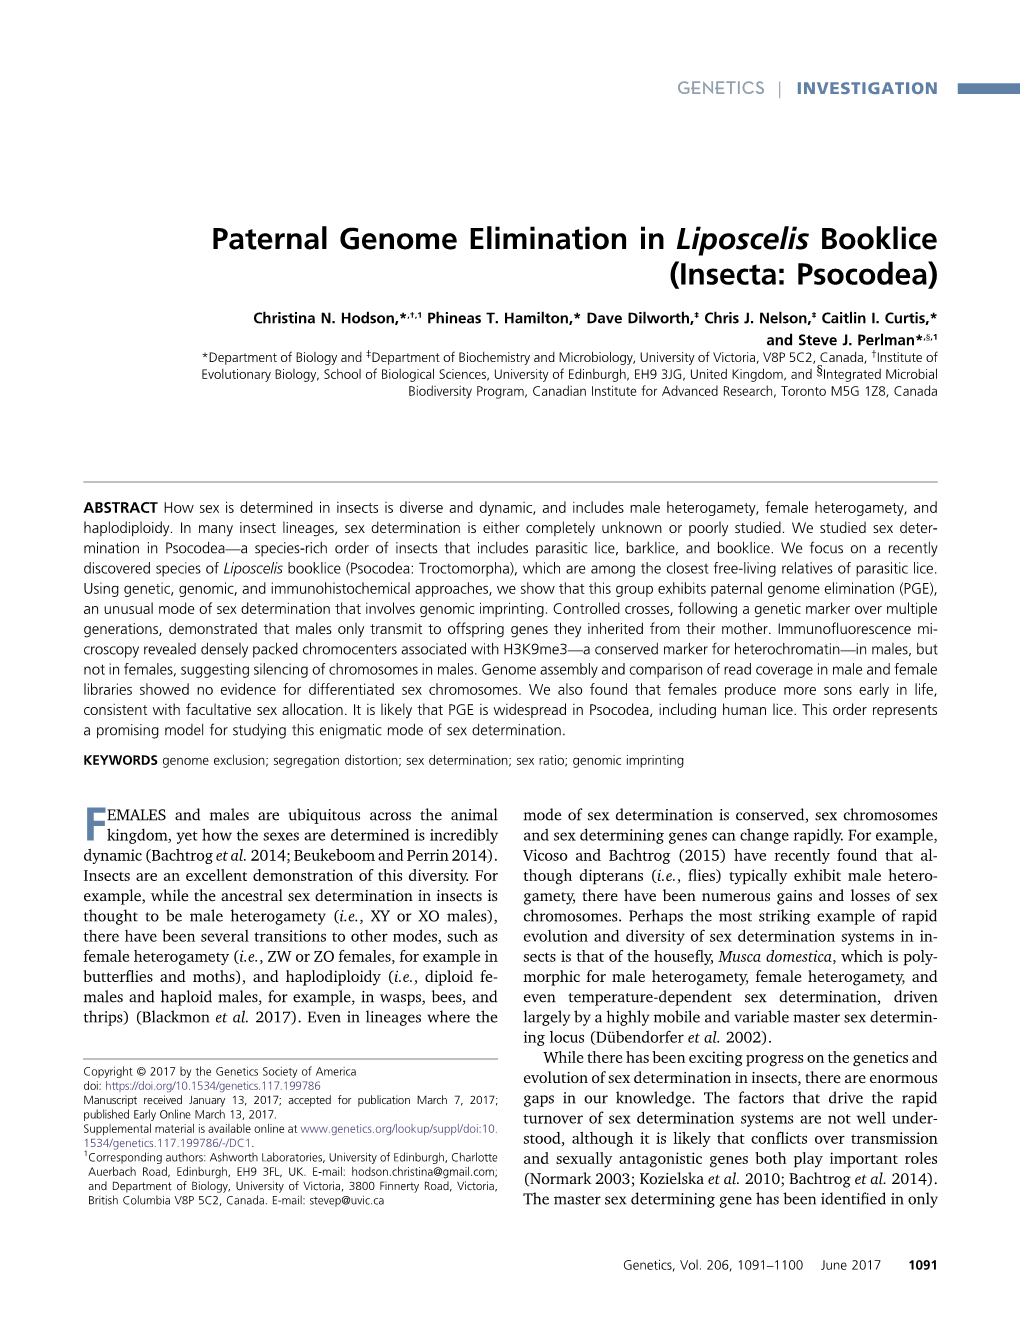 Paternal Genome Elimination in Liposcelis Booklice (Insecta: Psocodea)